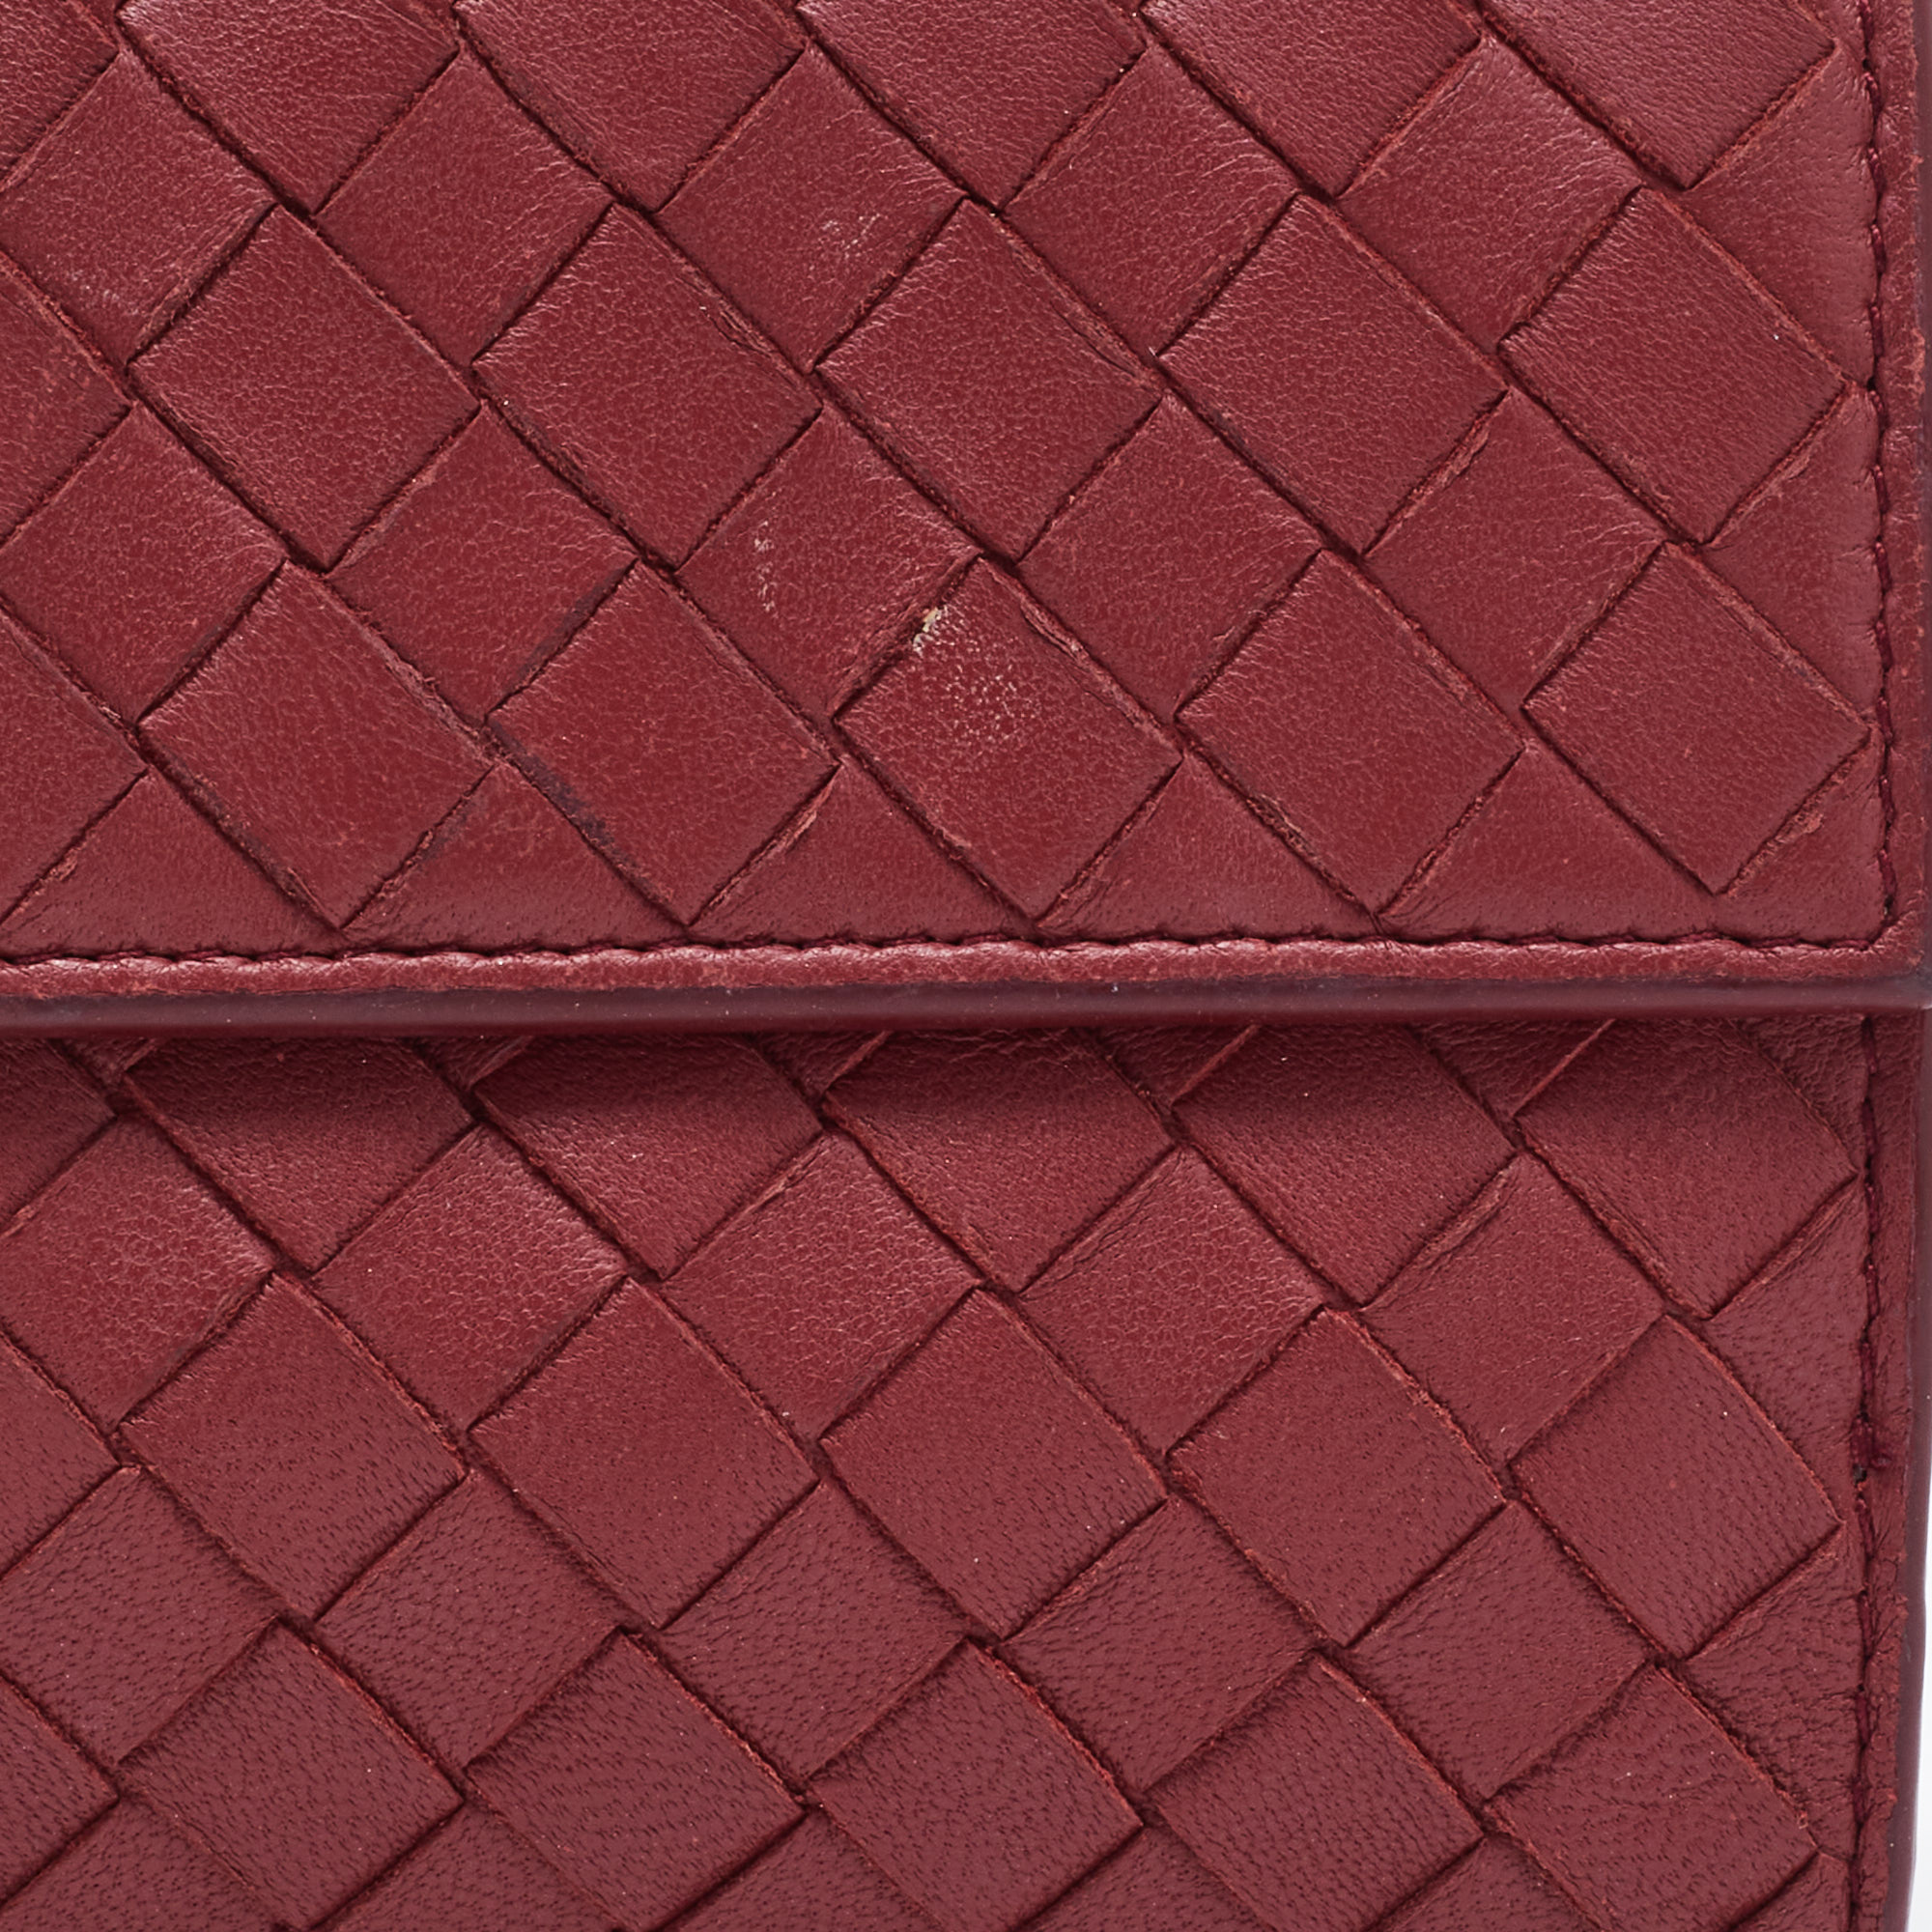 Bottega Veneta Reddish Brown Intrecciato Leather French Compact Wallet